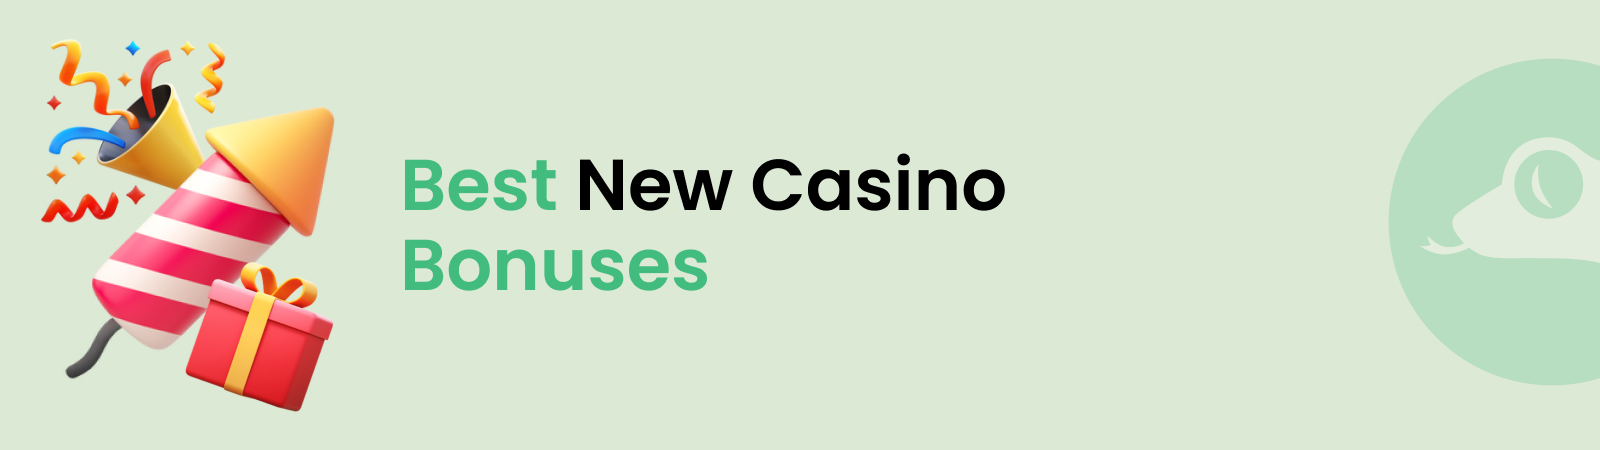 bonuses for newest casinos